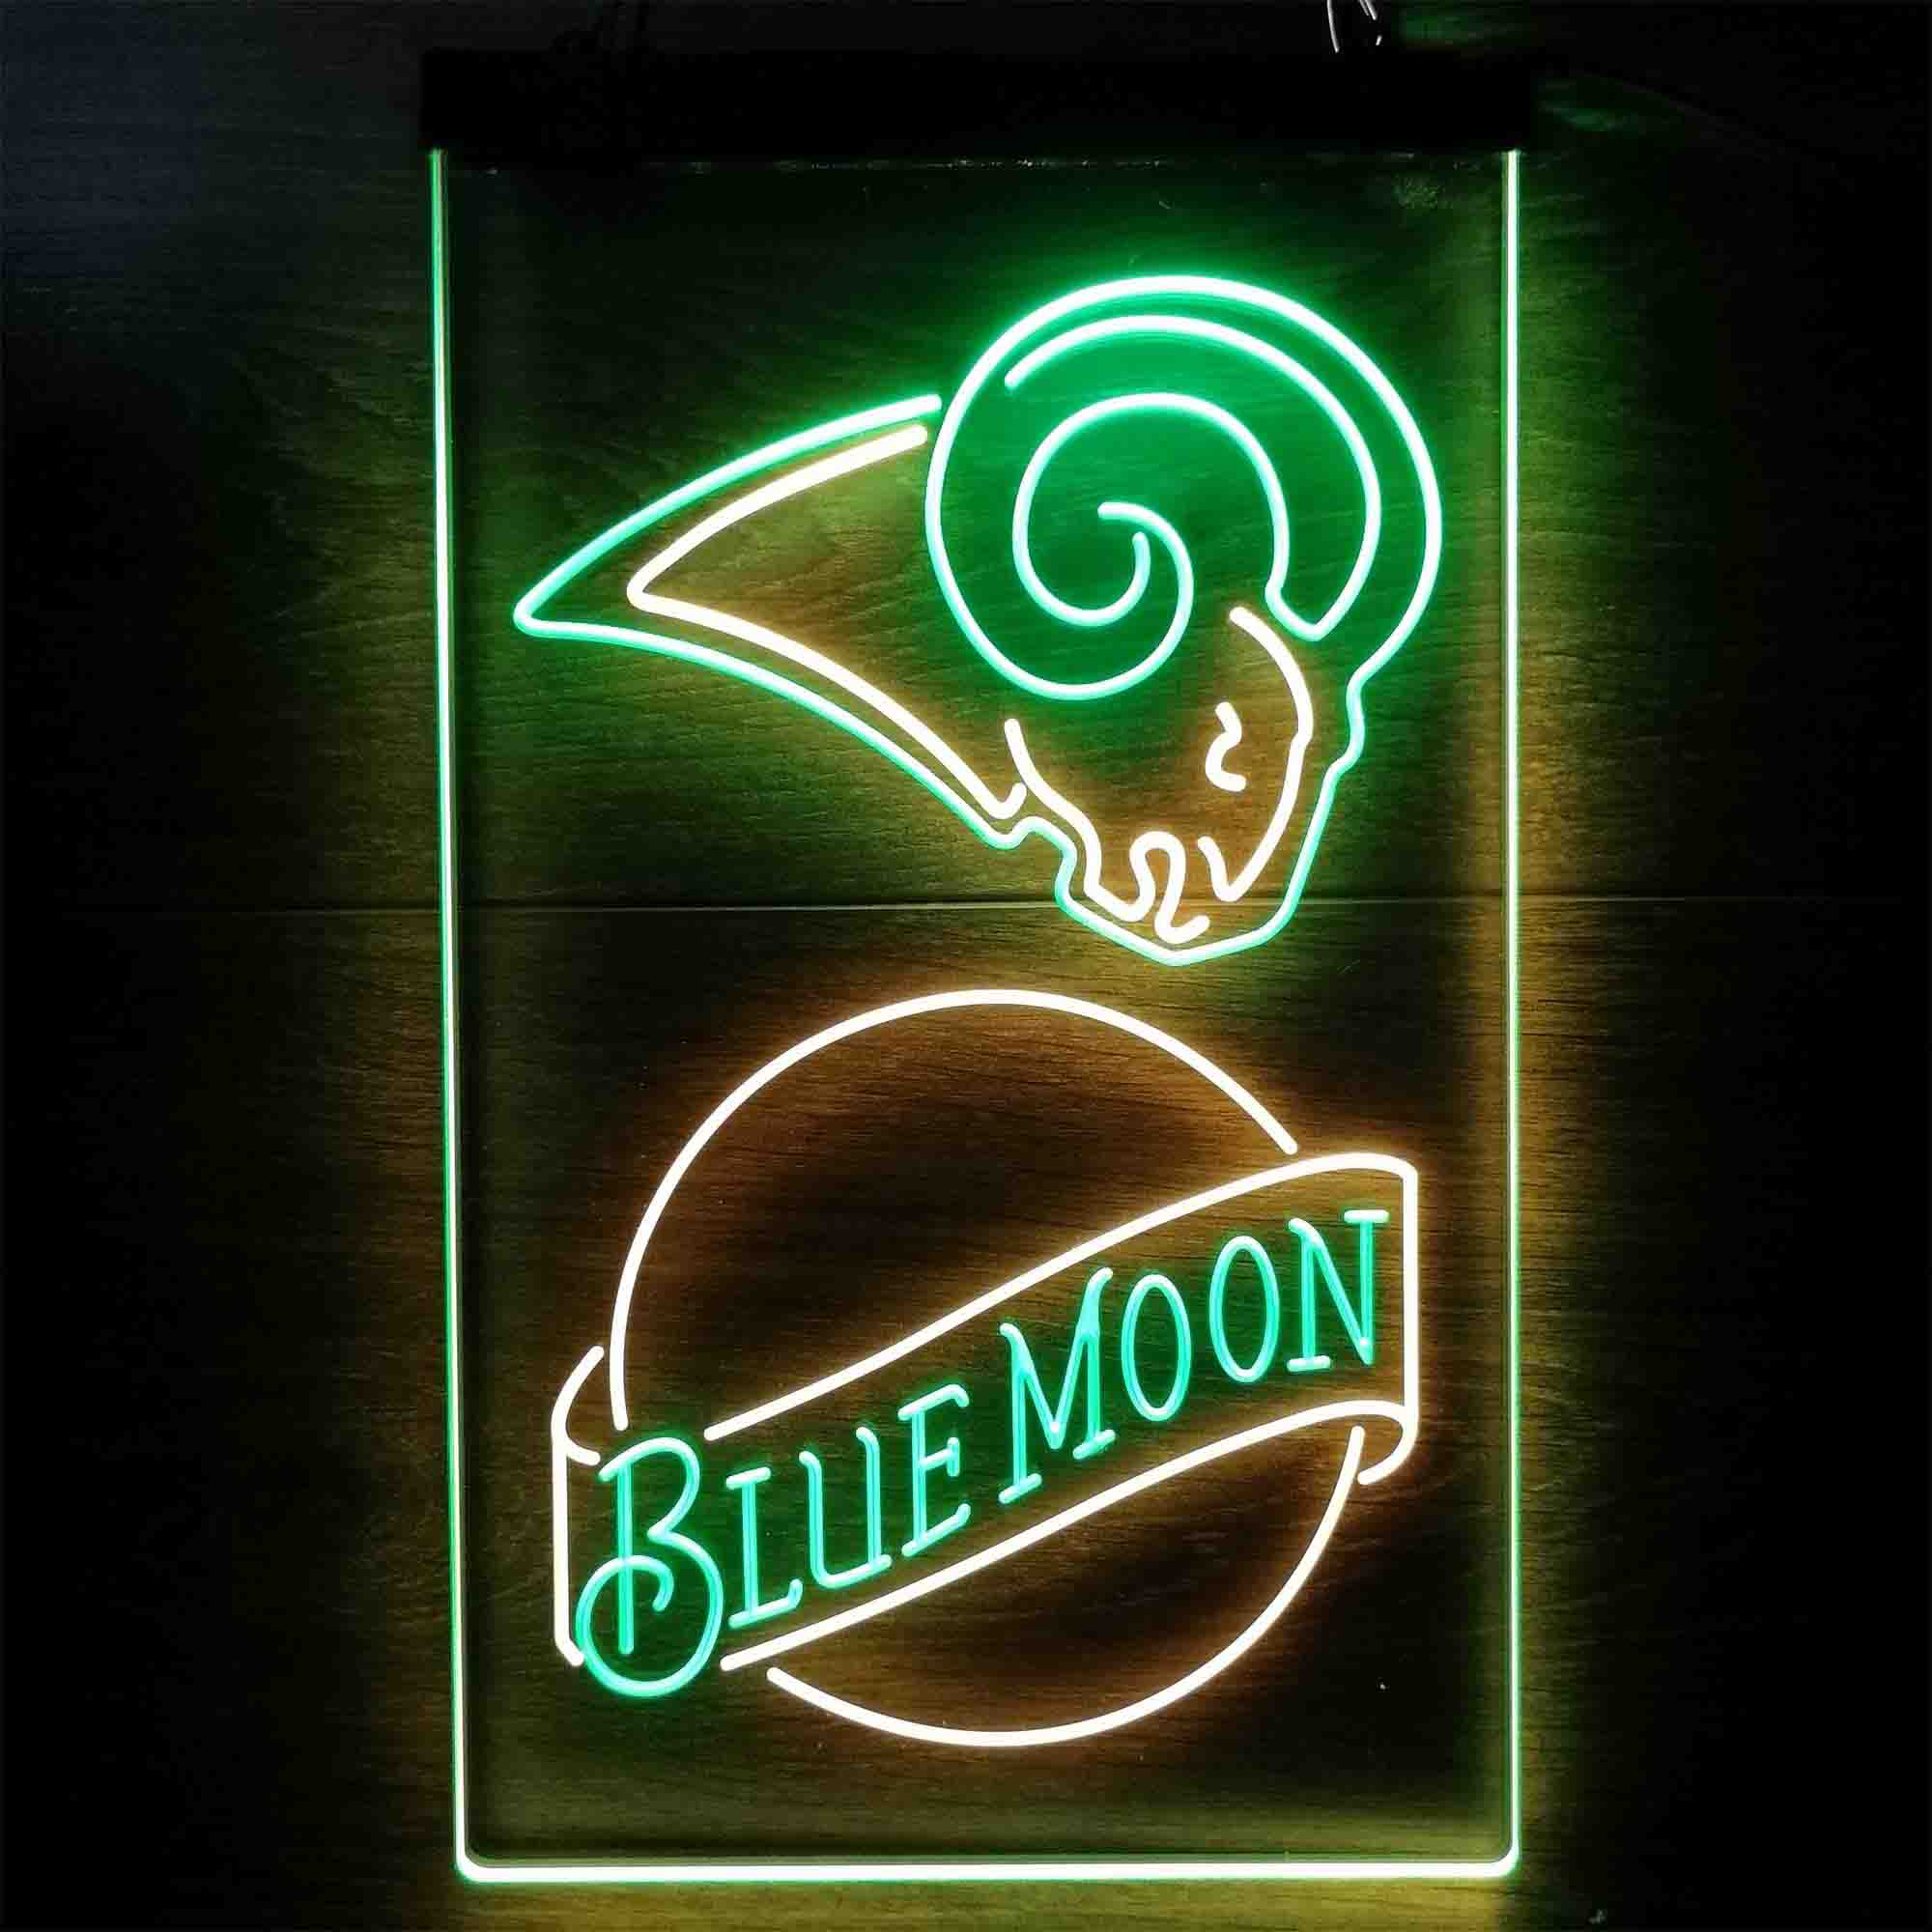 Blue Moon Bar Los Angeles Rams Est. 1937 LED Neon Sign